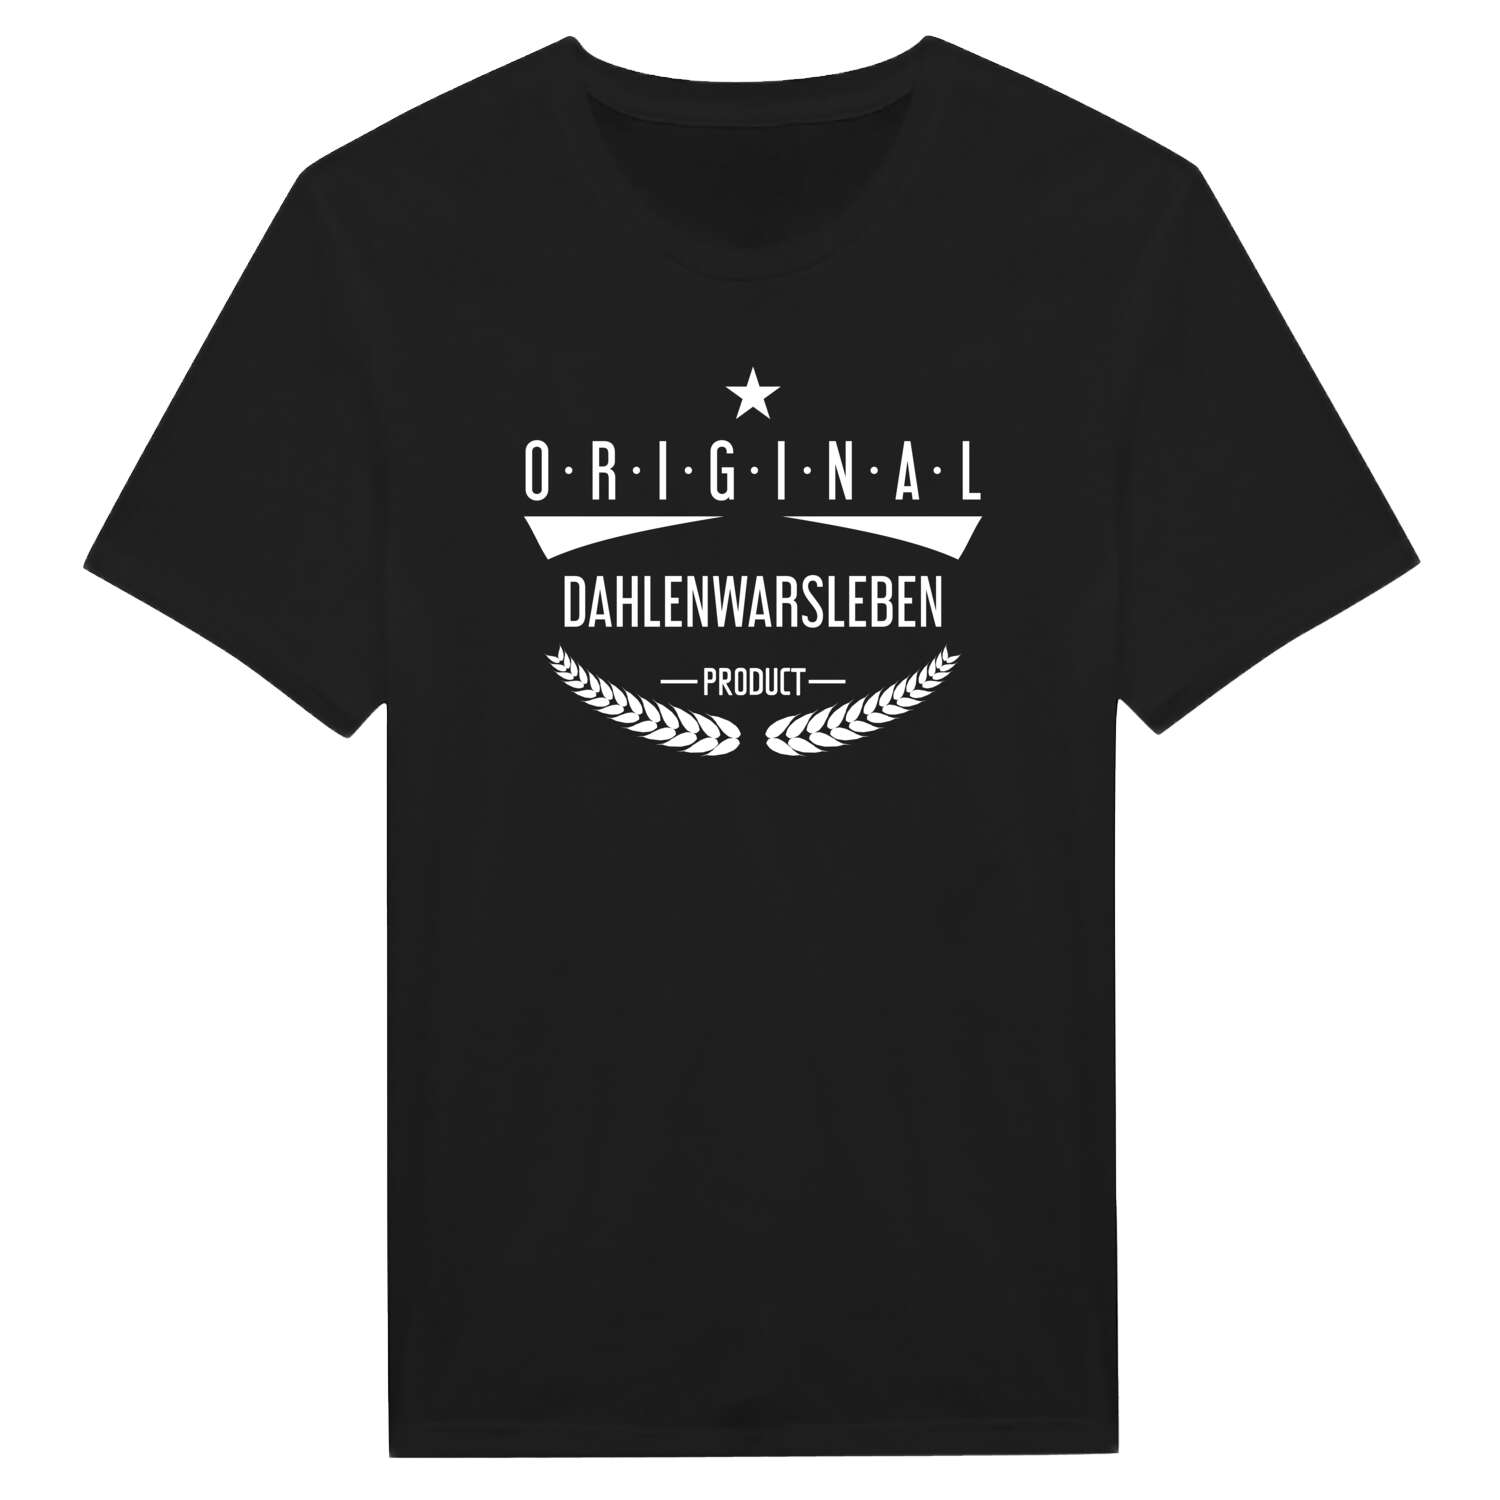 Dahlenwarsleben T-Shirt »Original Product«